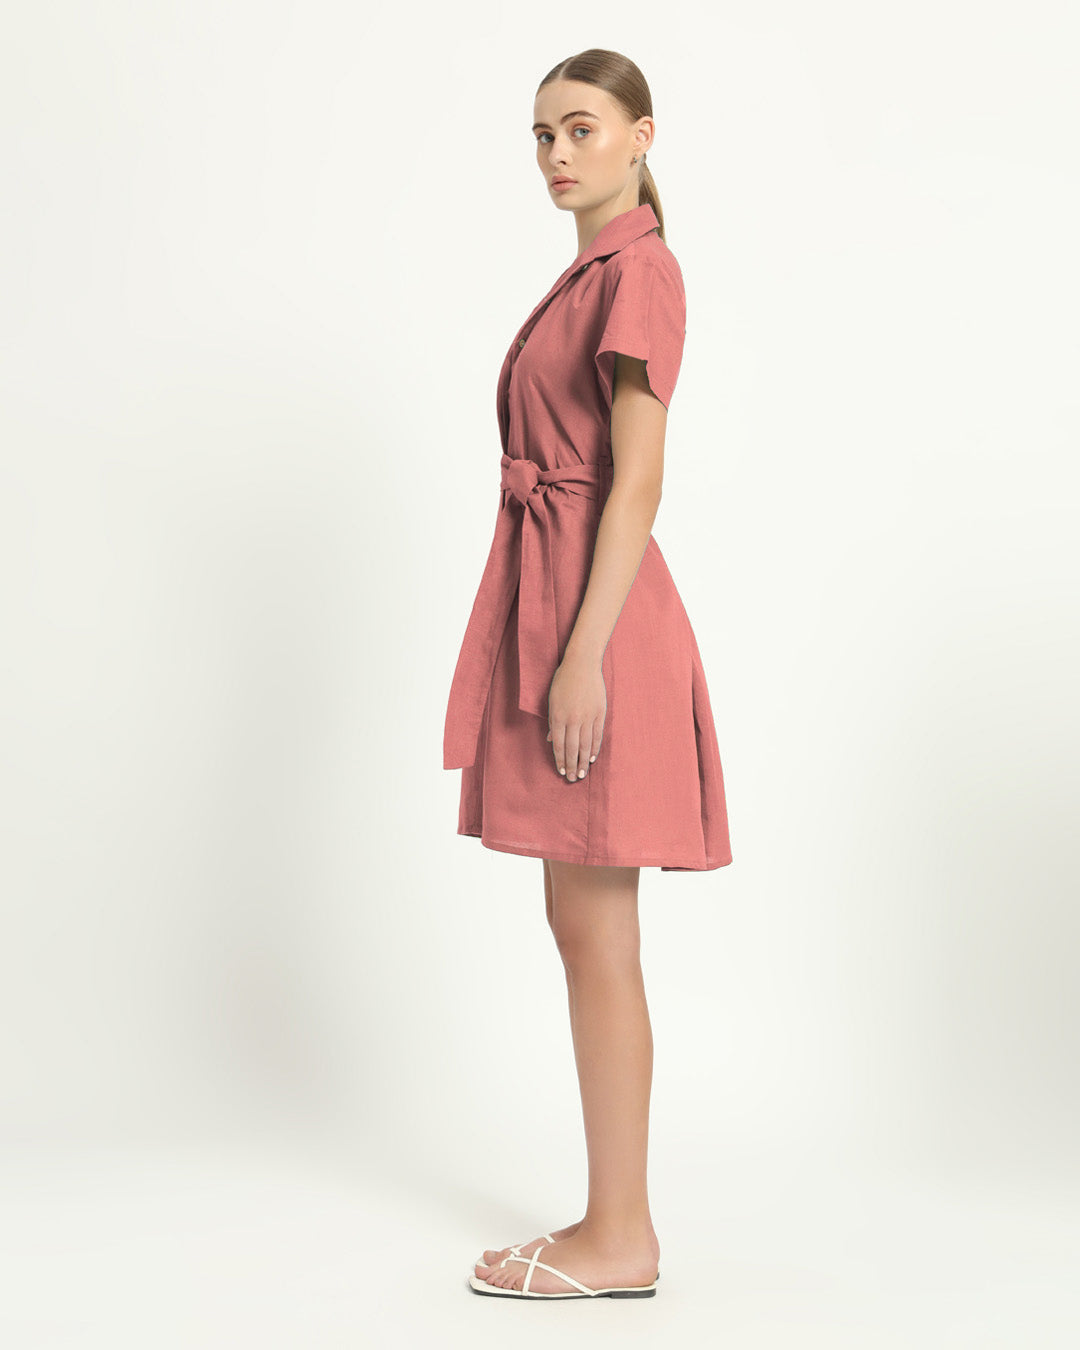 The Loretto Ivory Pink Cotton Dress